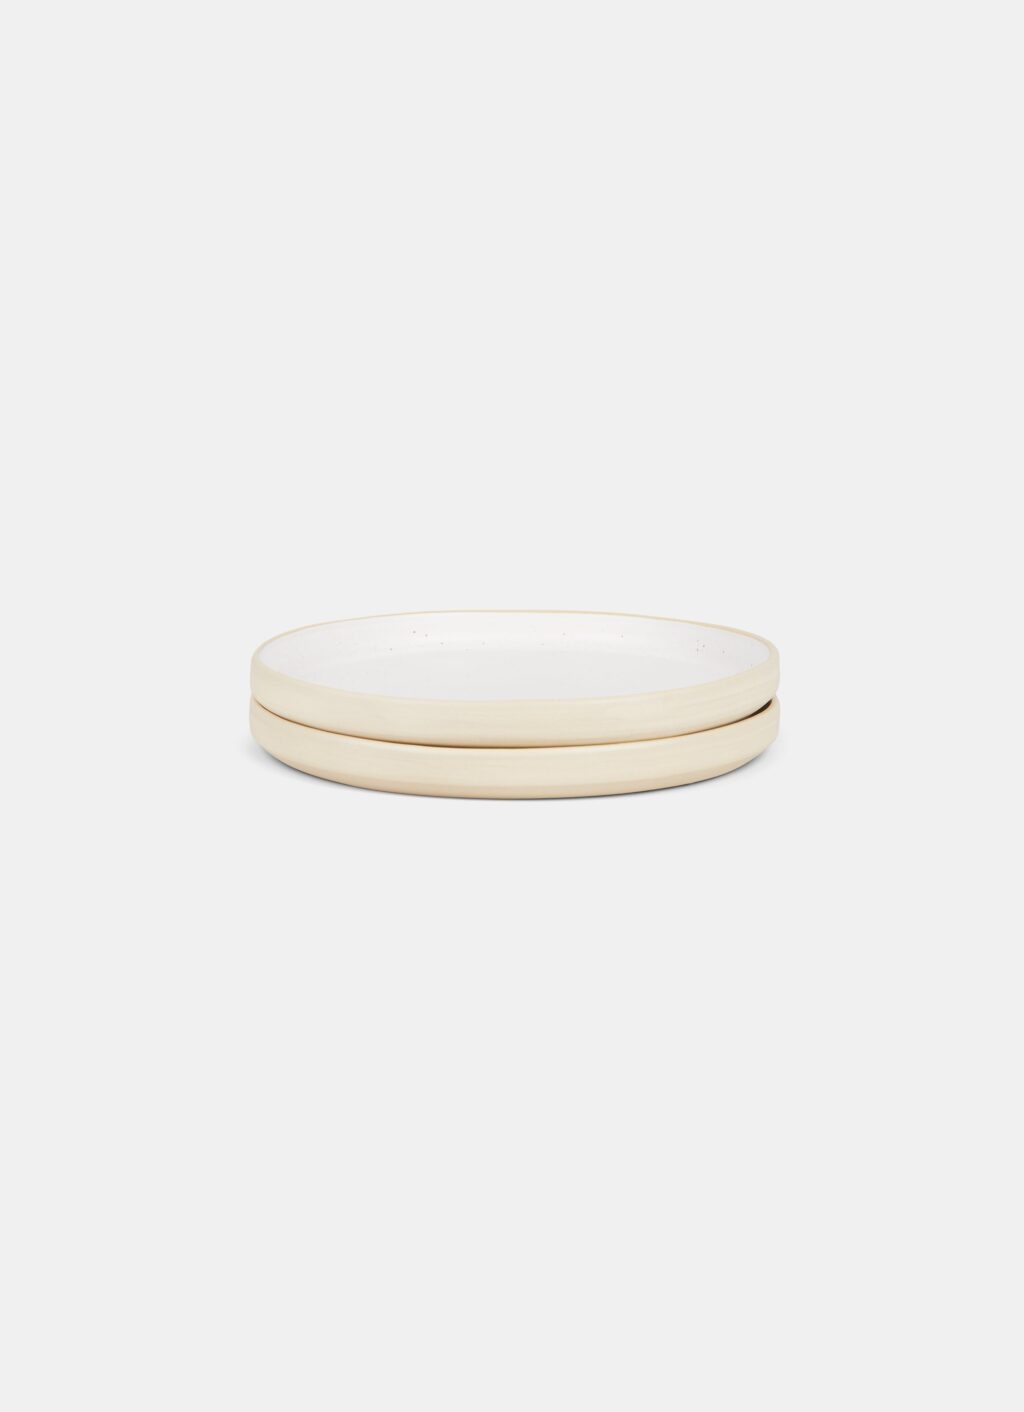 Frama - Otto Ceramic Plate Small - White - Set of two